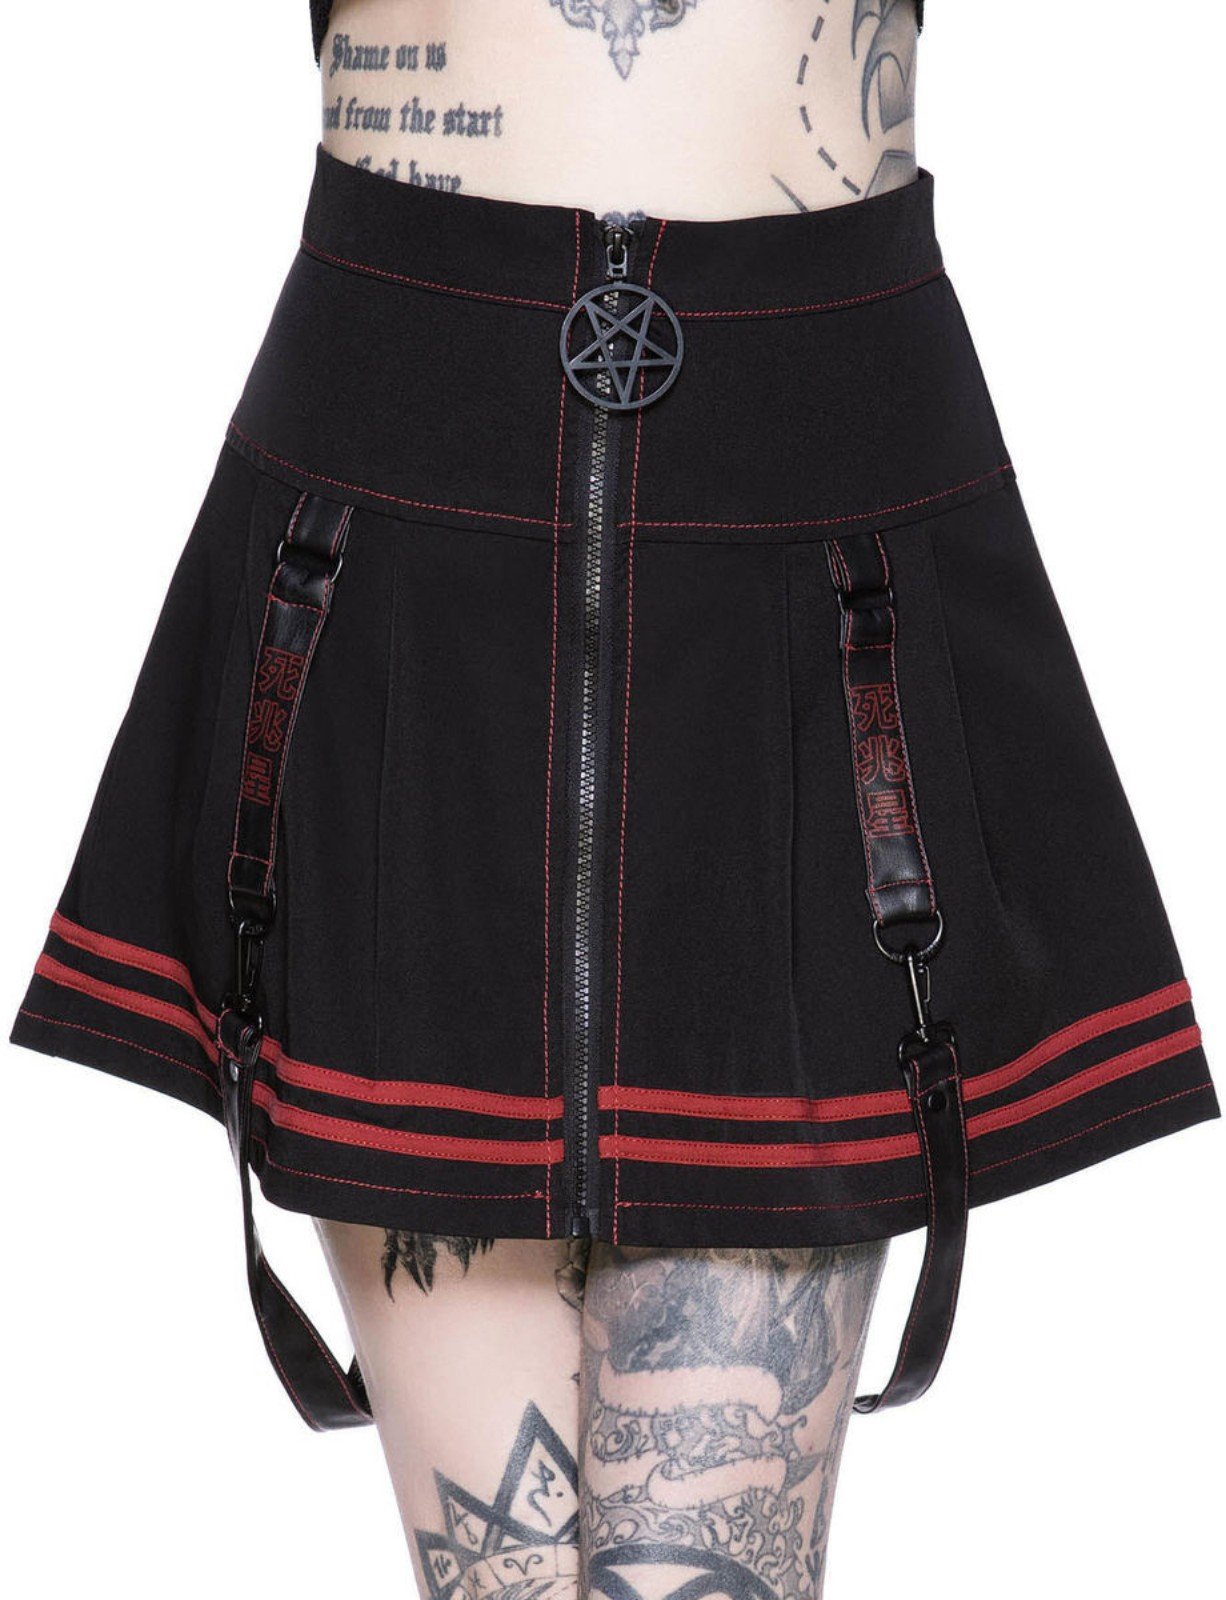 Killstar Red Stitch Pentagram Gothic Skirt Hot Topic Dollskill Widow Sourpuss DlLYrb5ay